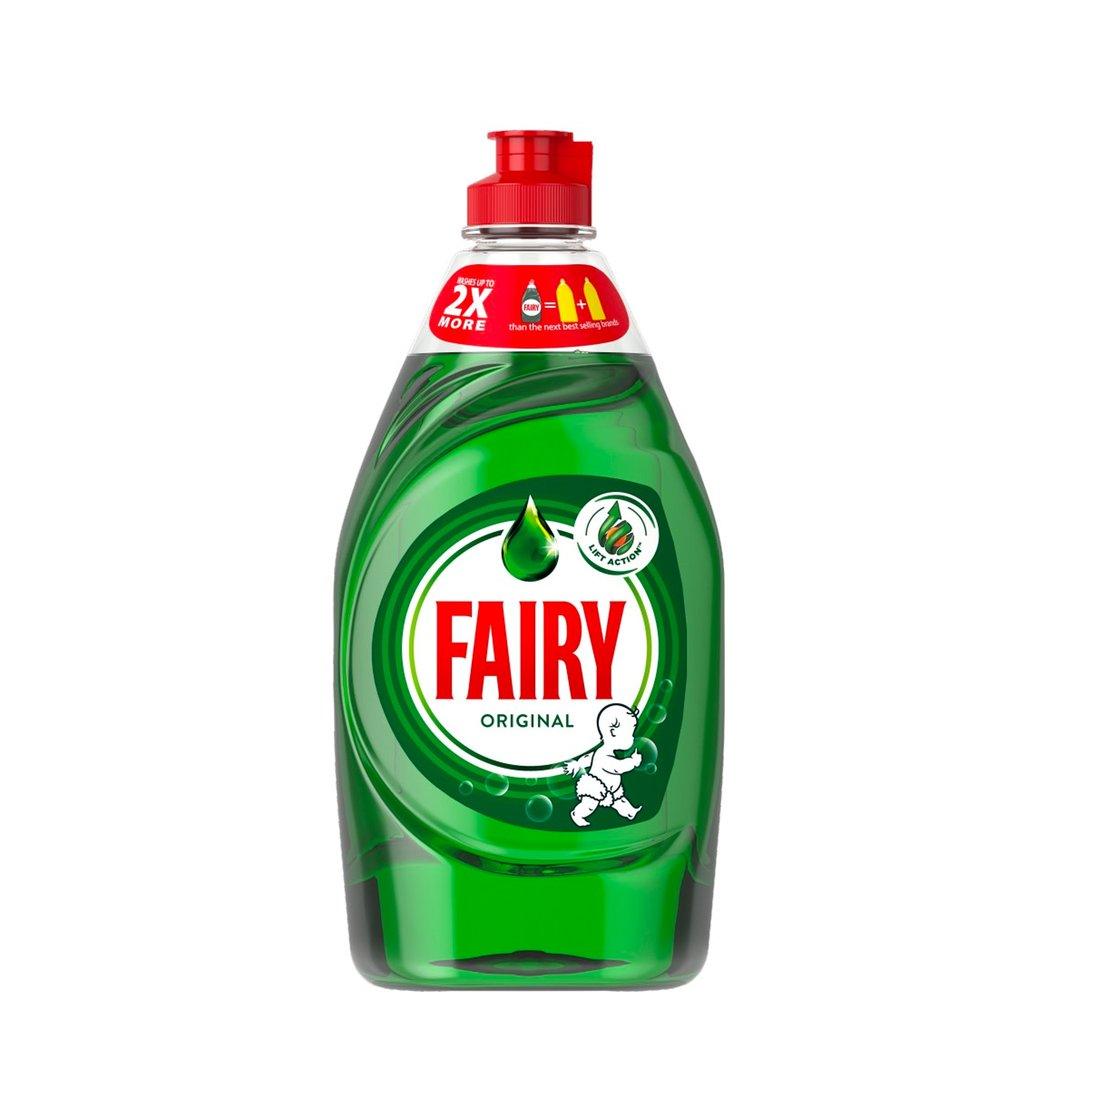 Fairy Original Washing Up Liquid - 320ml Bottle - Vending Superstore